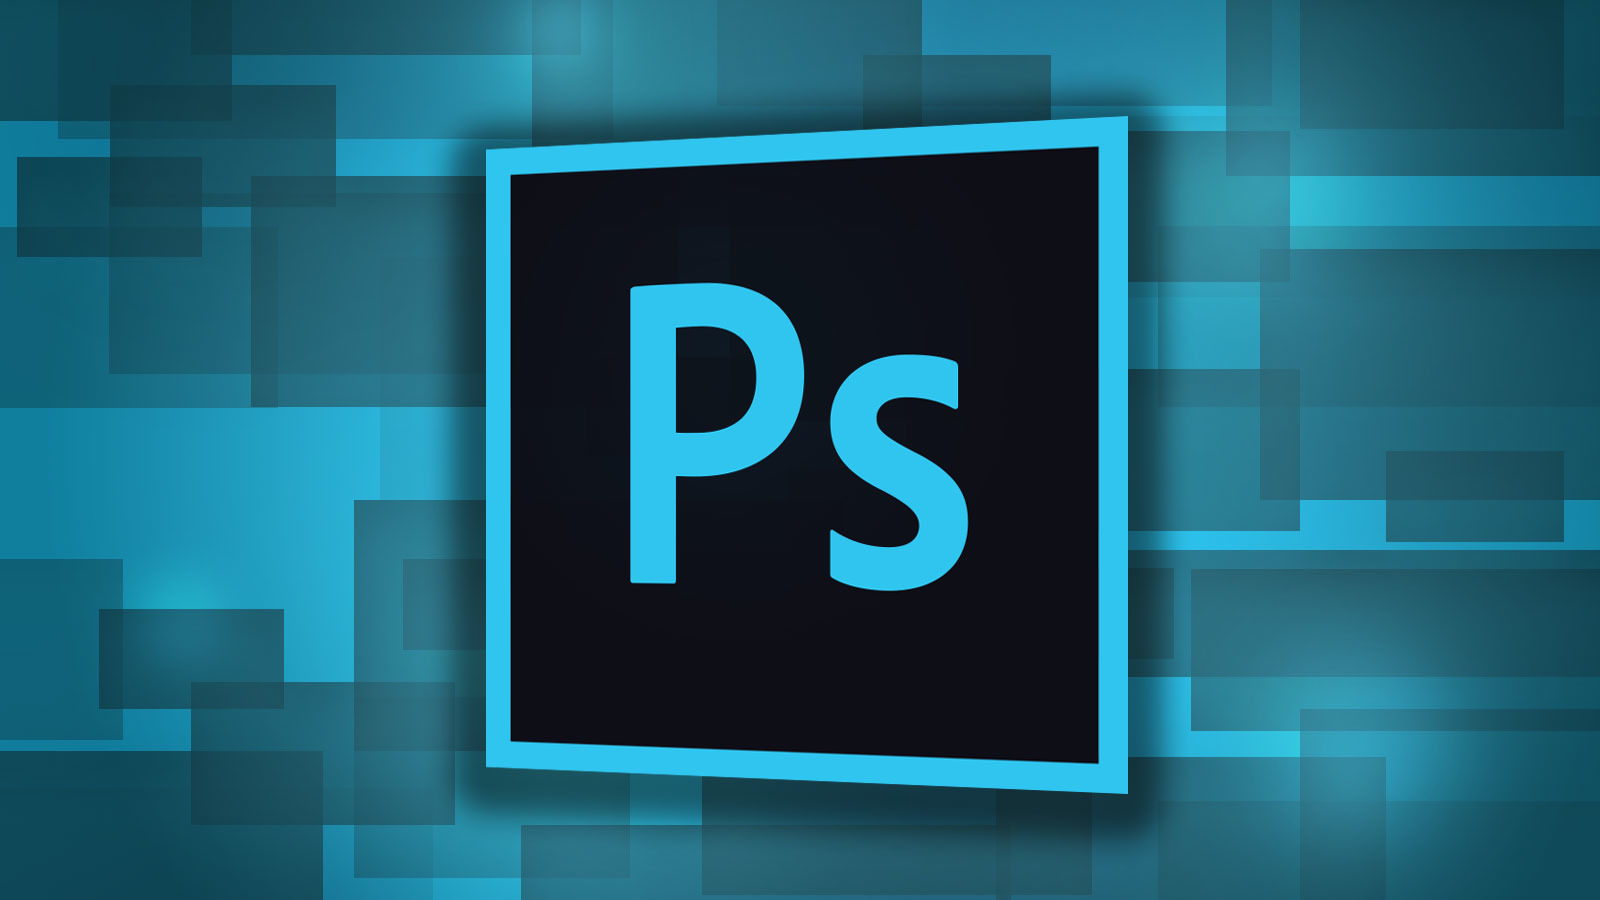 Adobe Photoshop Wallpapers Technology Hq Adobe Photoshop Pictures 4k Wallpapers 2019